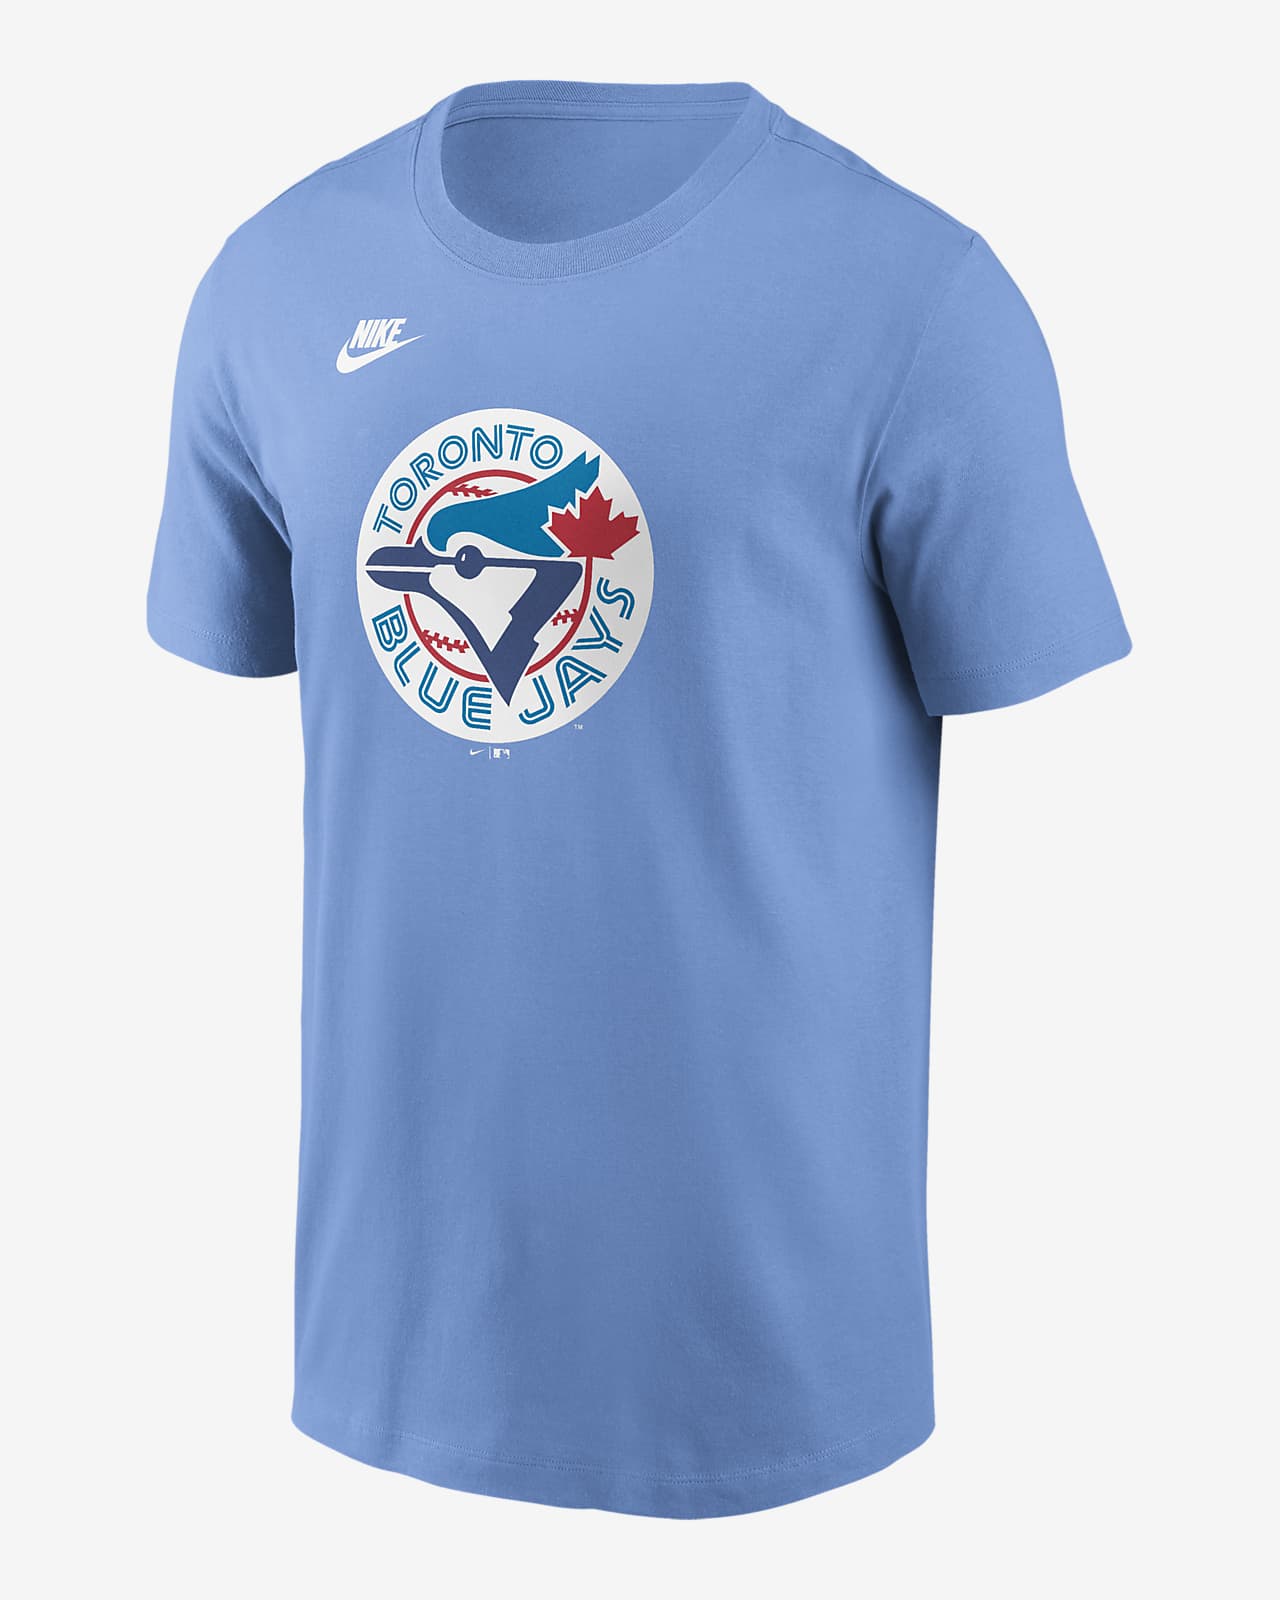 Playera Nike de la MLB para hombre Toronto Blue Jays Cooperstown Logo